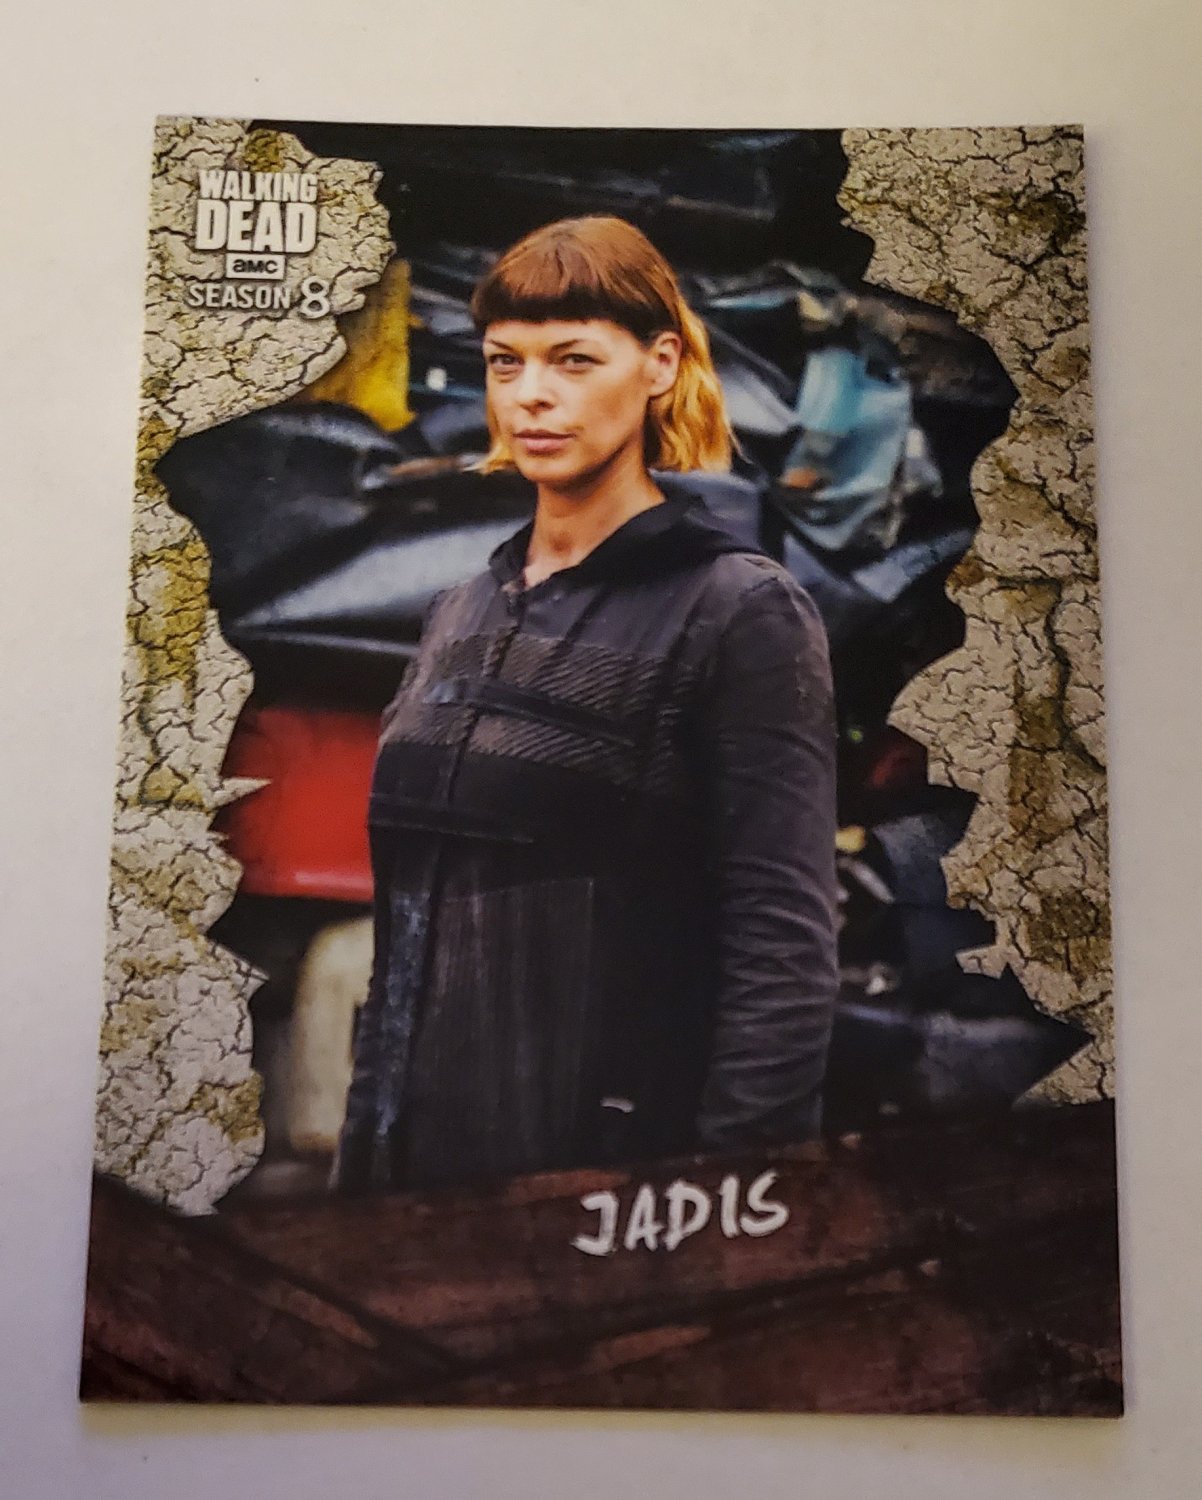 Jadis 2018 The Walking Dead Season 8 Part 1 Characters Insert Card